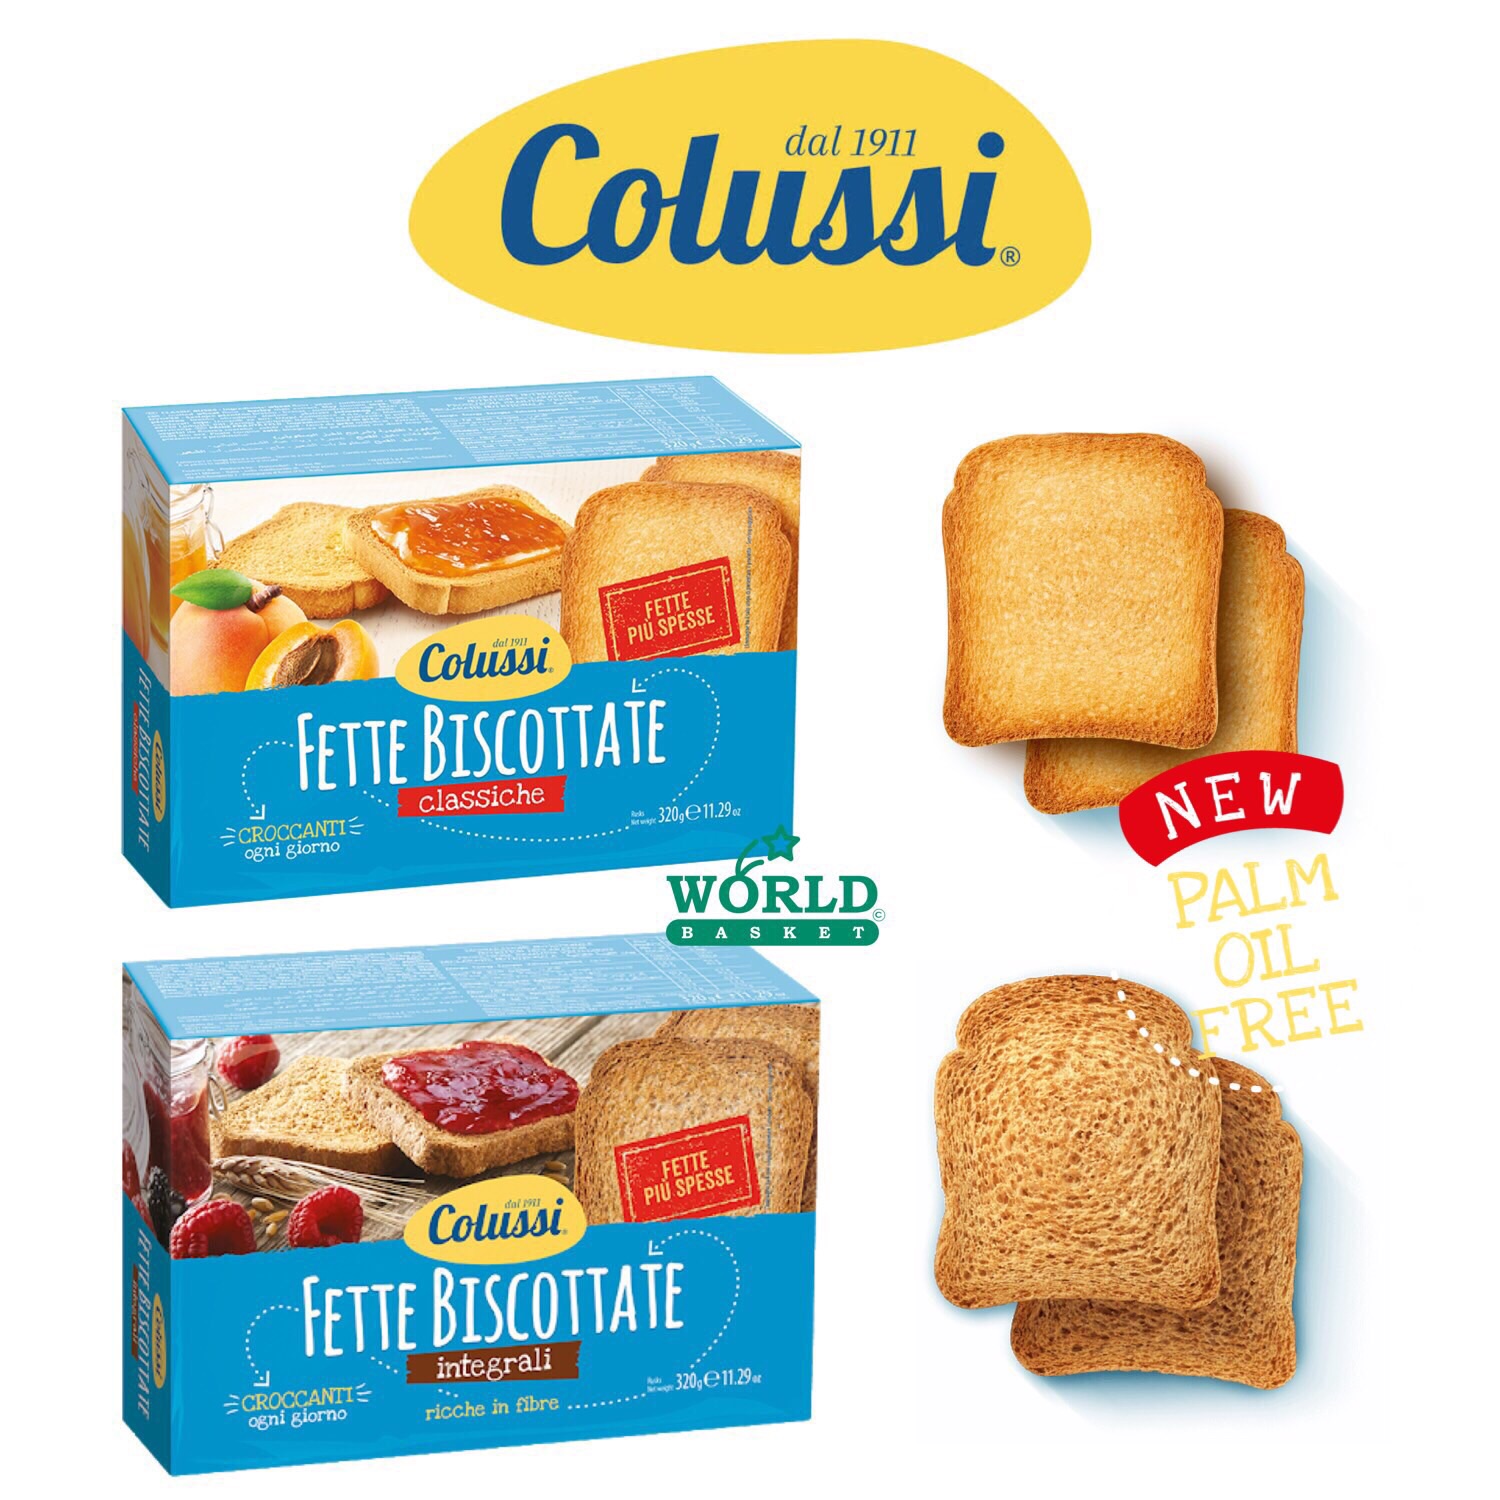 ?? COLUSSI Fette Biscottate - Classic Rusks & Whole-Grain Rusks 320g?แพนโคลุสชี่ ขนมปังกรอบชนิดแผ่น?นำเข้าจากอิตาลี?